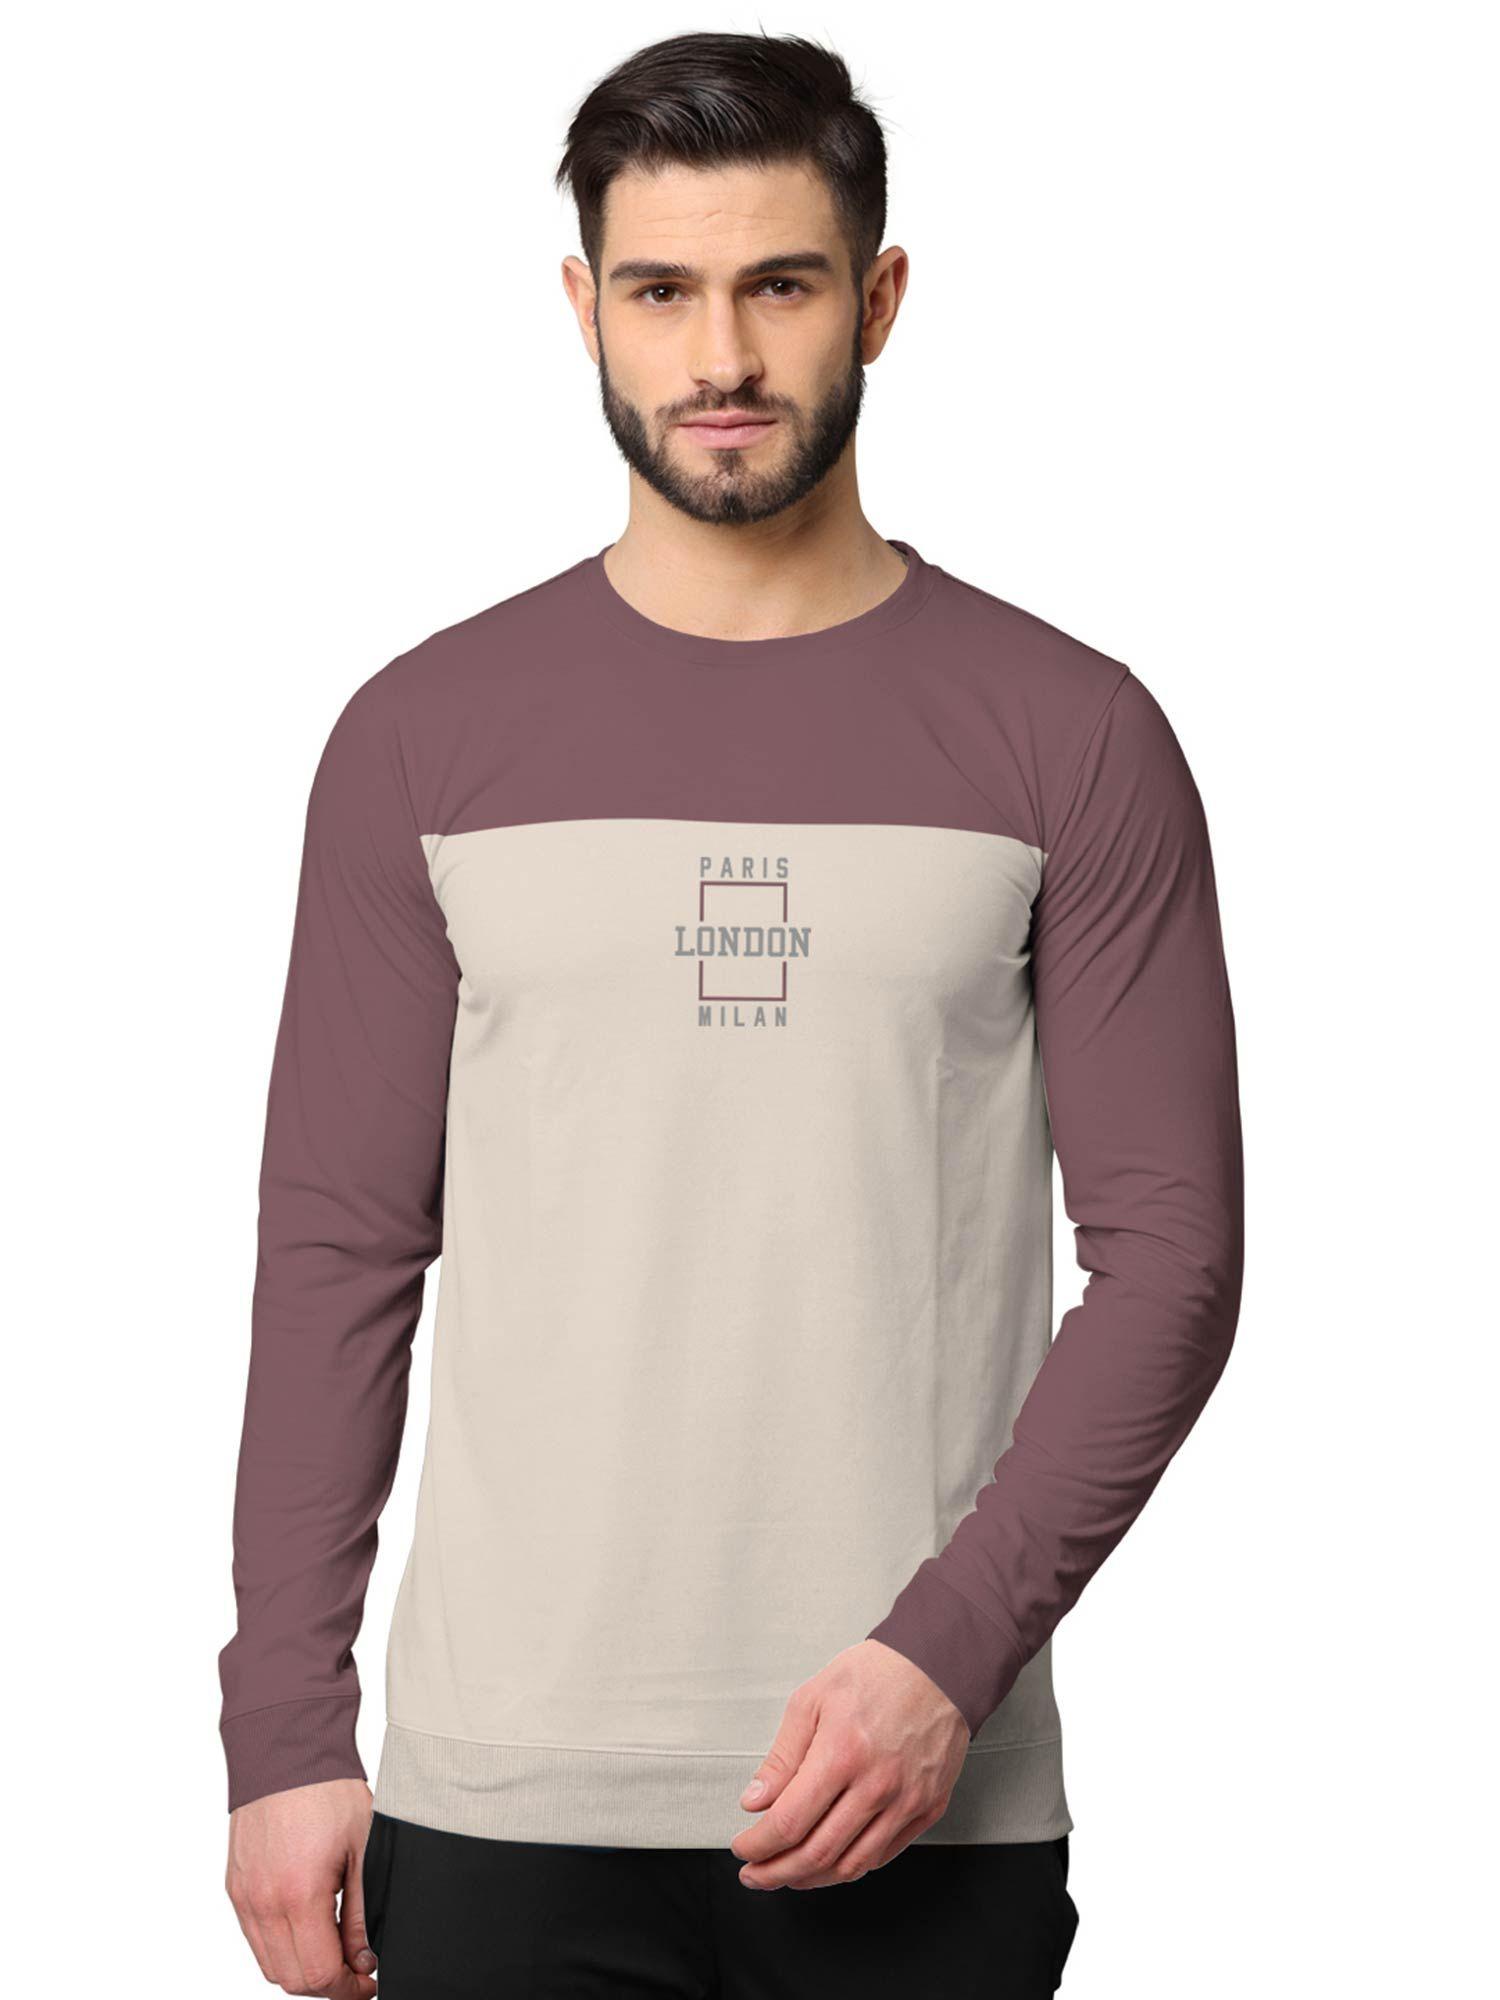 colorblock full sleeve sweatshirts for men purple and beige